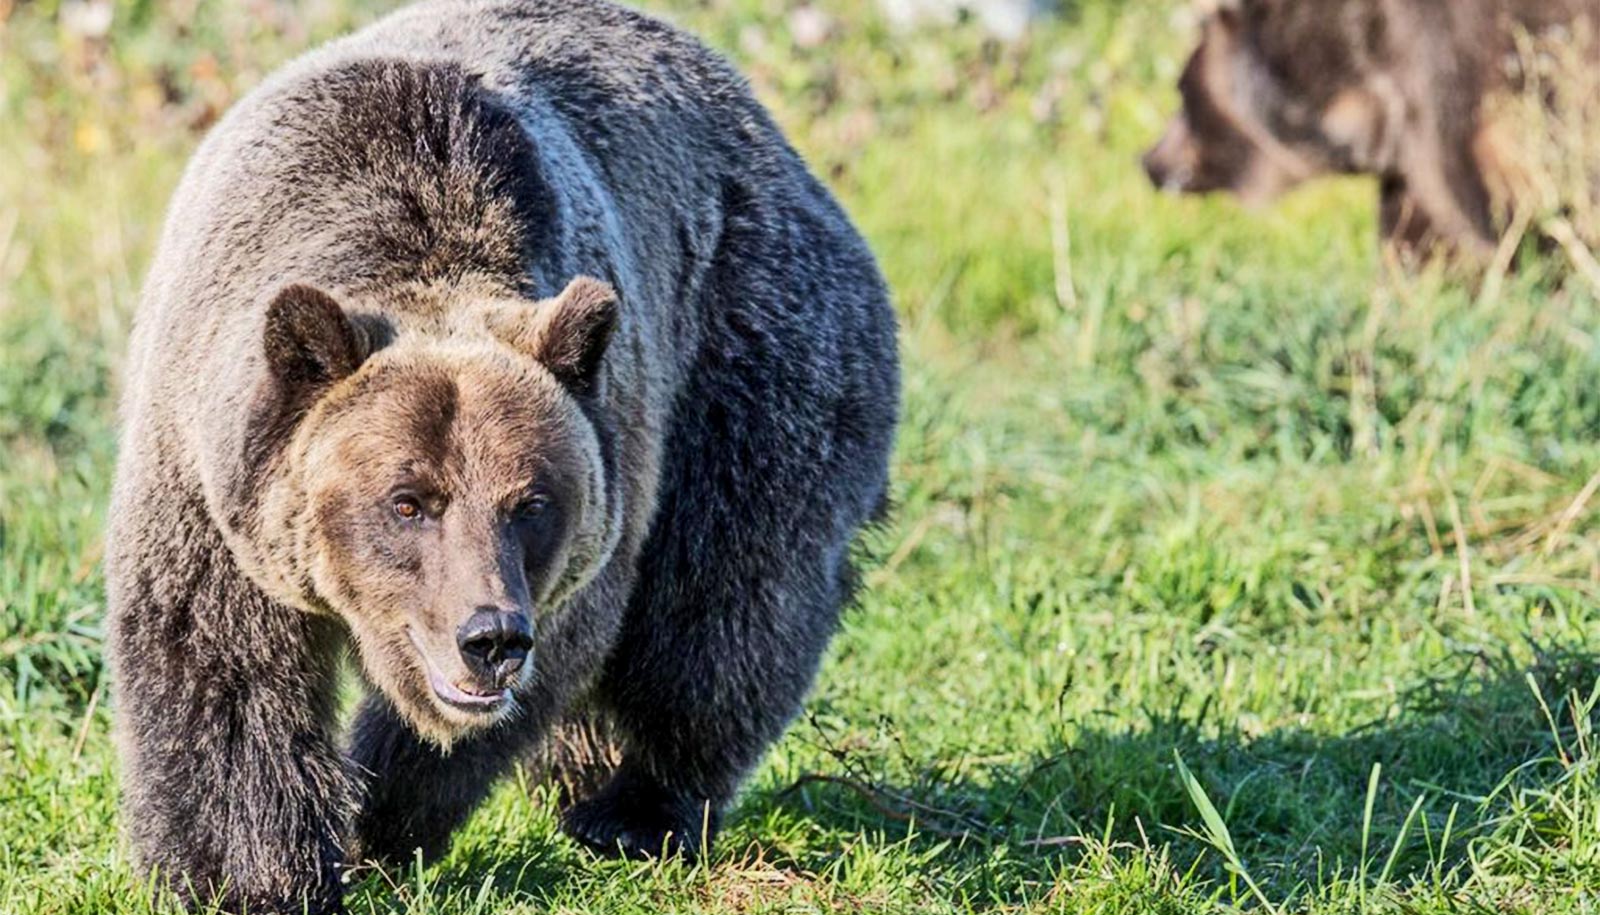 Grizzly bear internal clocks keep ticking in hibernation